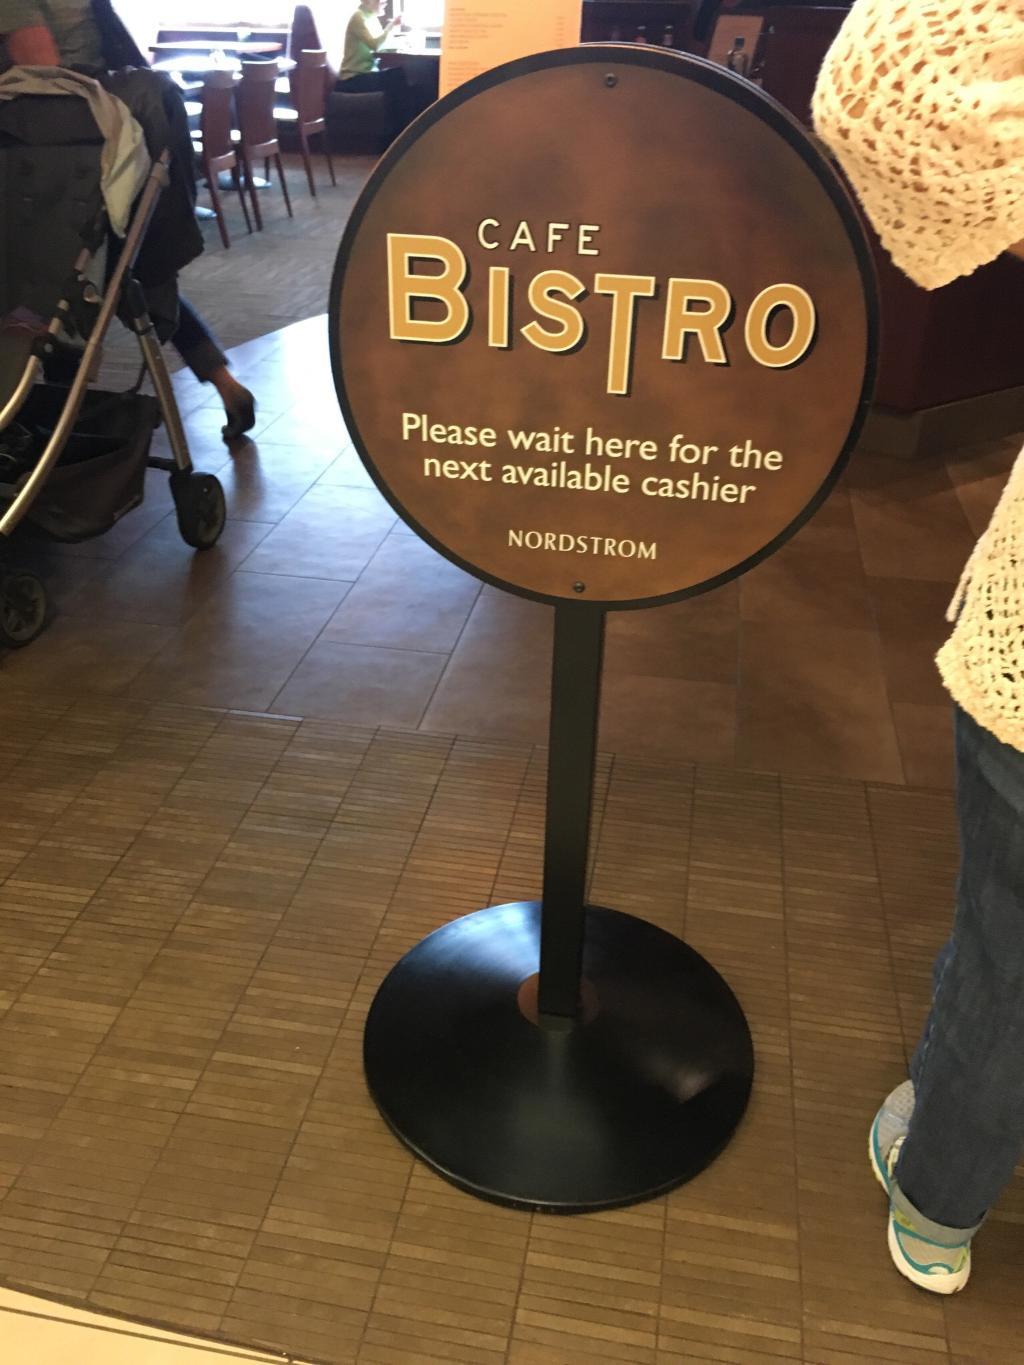 Cafe bistro nordstroms galleria Mall